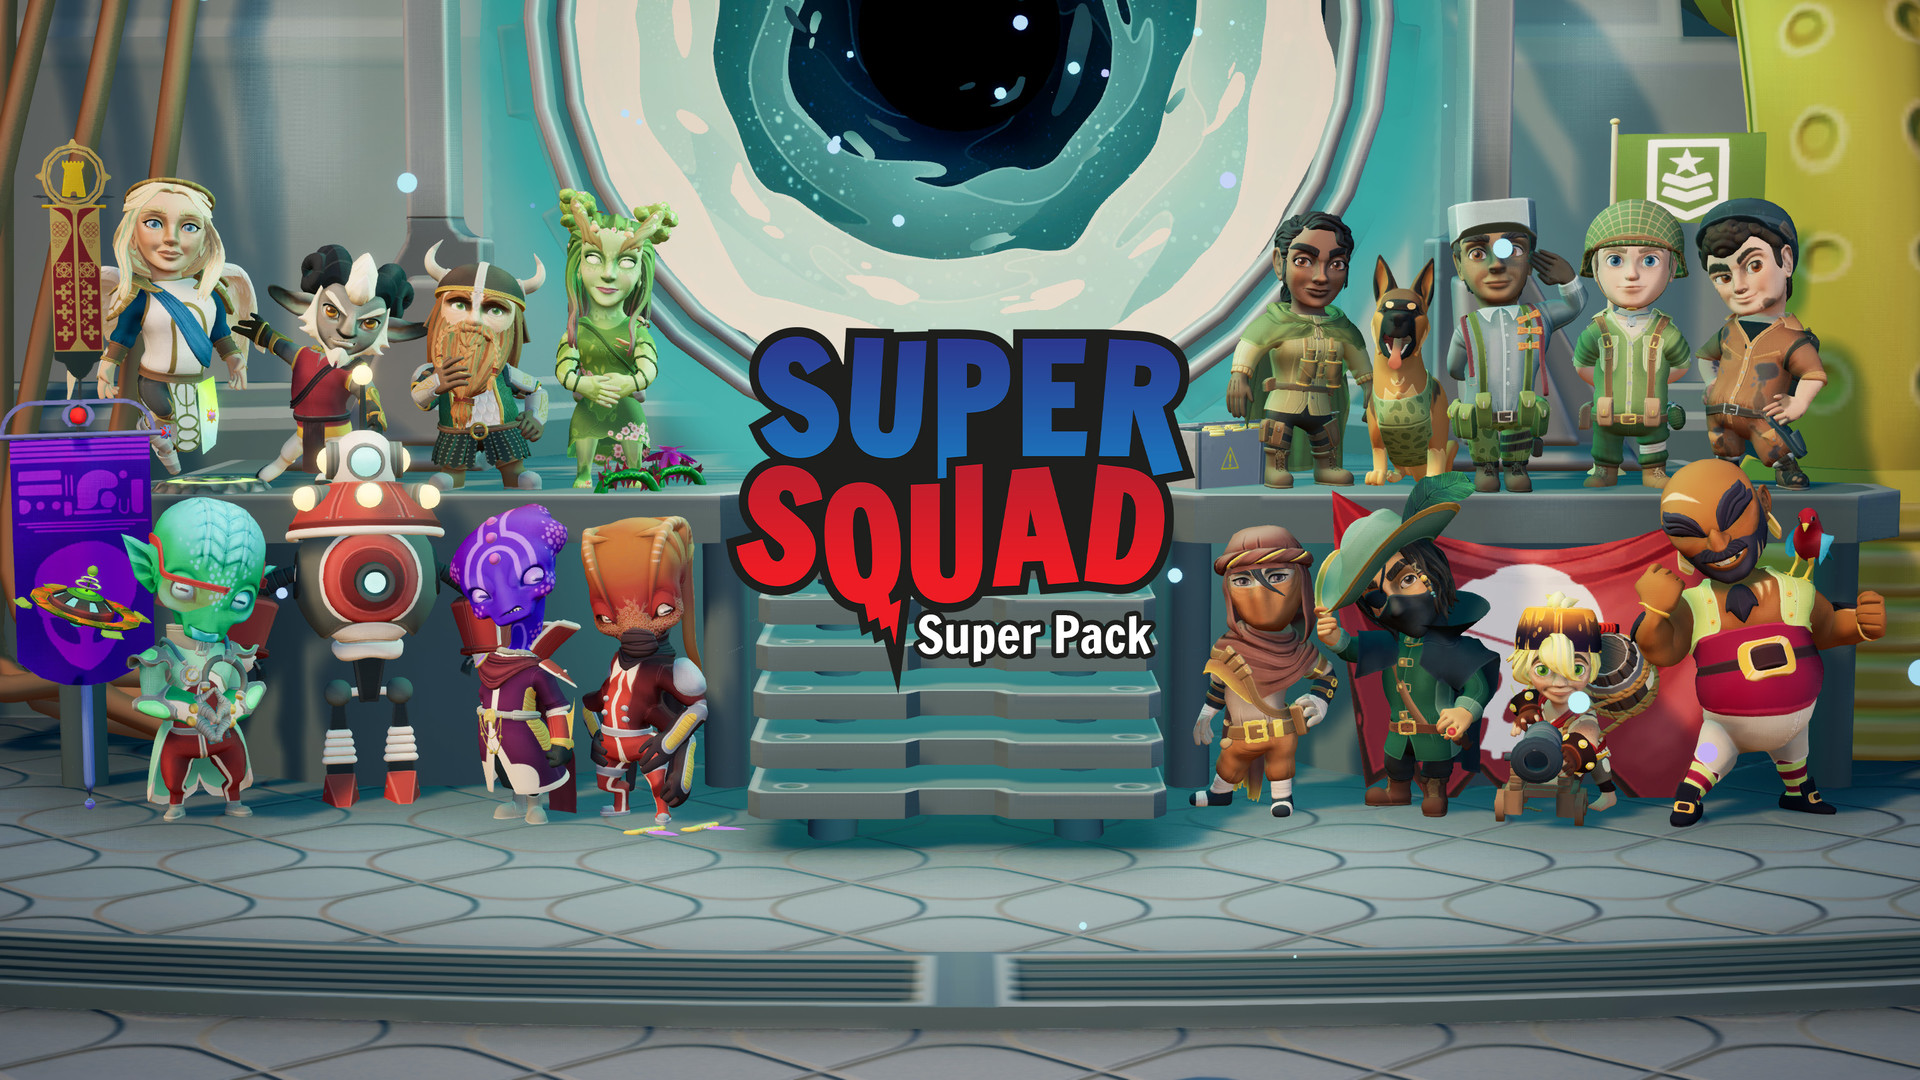 Super Squad - Super Pack DLC Steam CD Key 22.59 $